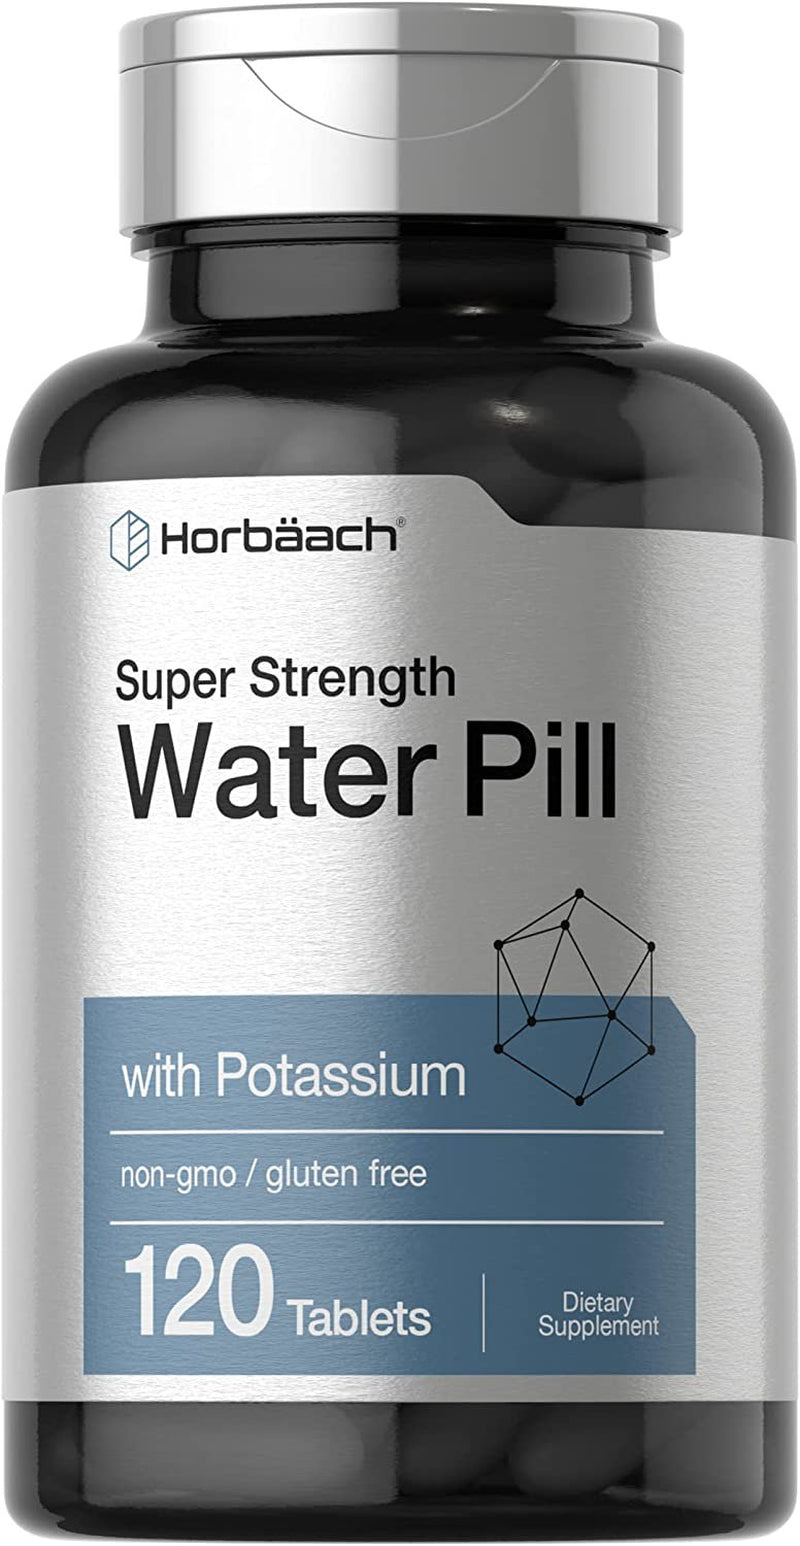 Water Pills | Super Strength | 120 Vegetarian Tablets | by Horbaach